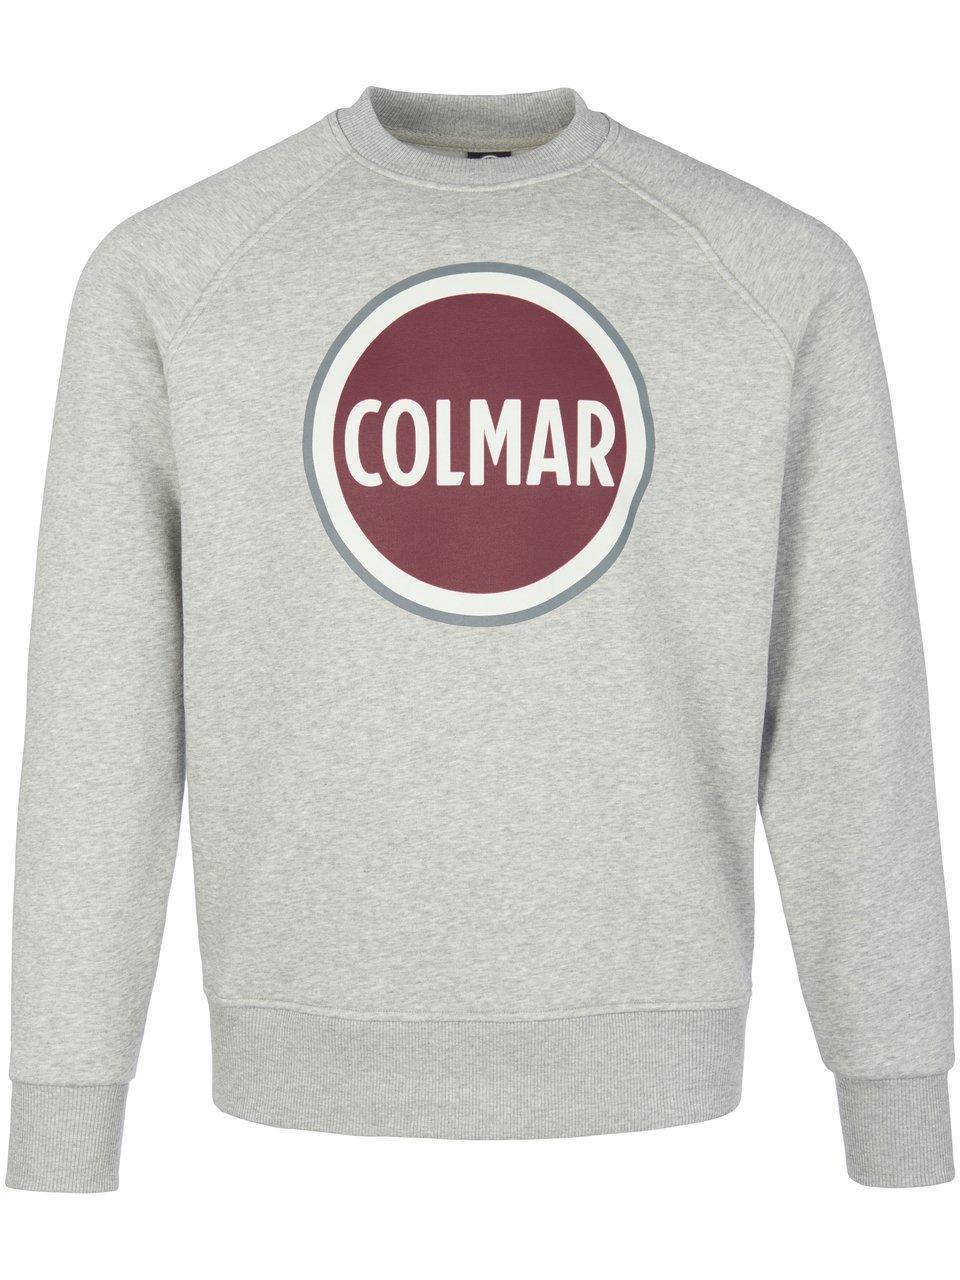 COLMAR - Sweatshirt